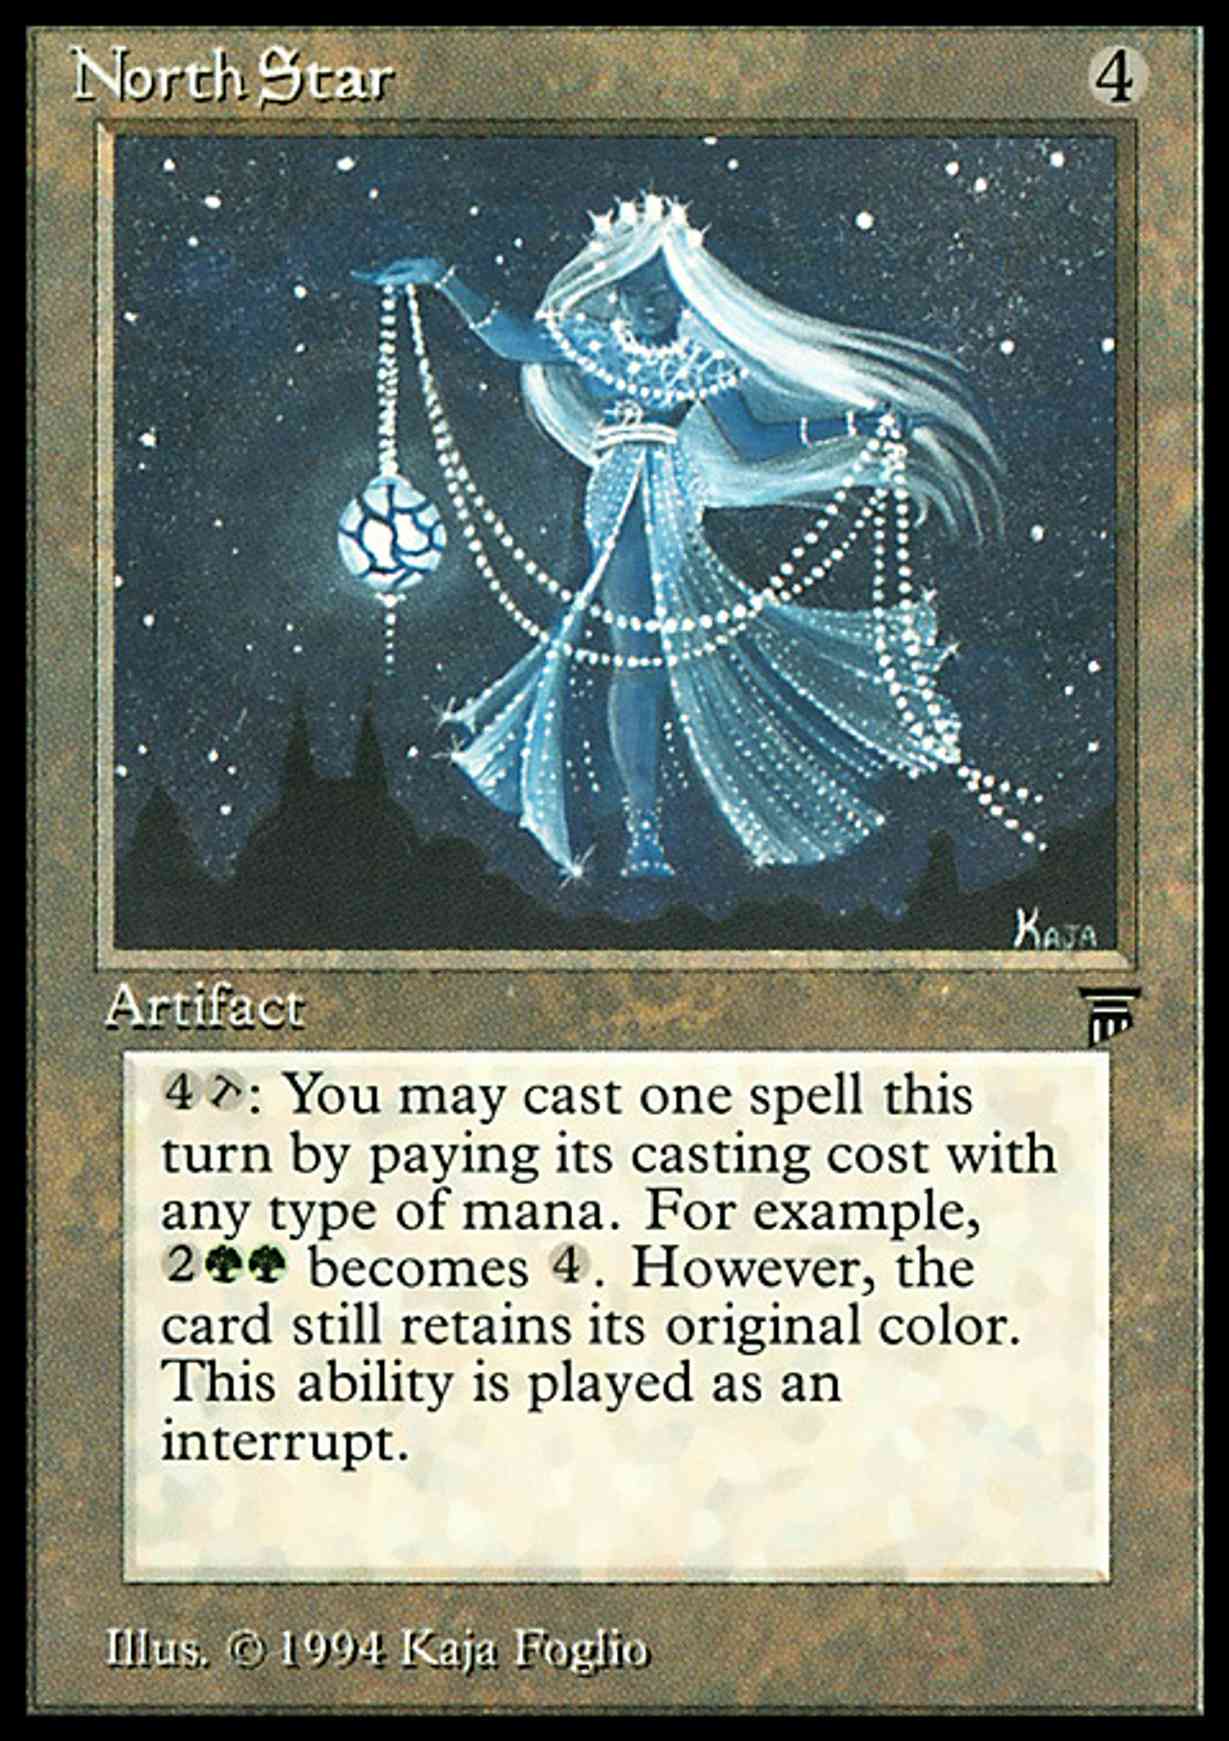 North Star magic card front